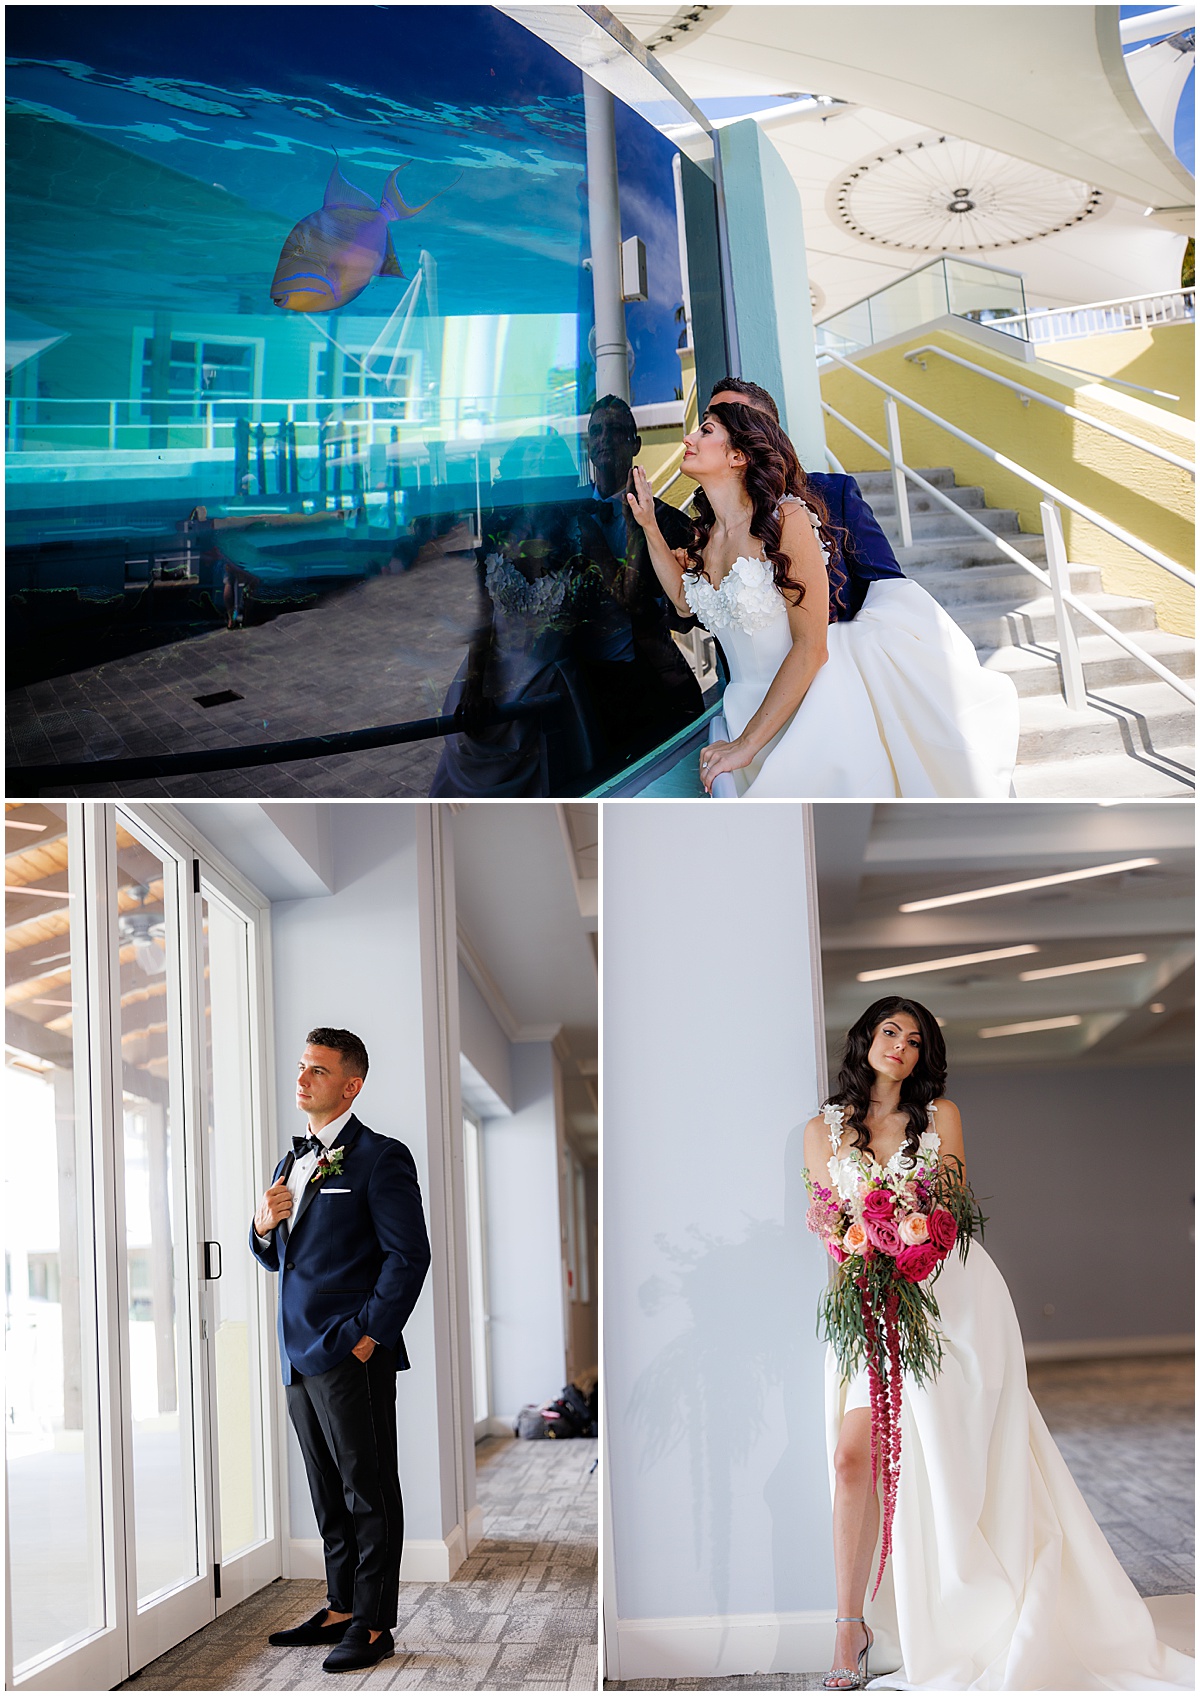 Unique Wedding Venue | Loggerhead MarineLife Center | Juno Beach, FL | Married in Palm Beach | www.marriedinpalmbeach.com | Rosina DiBello Photography Studio